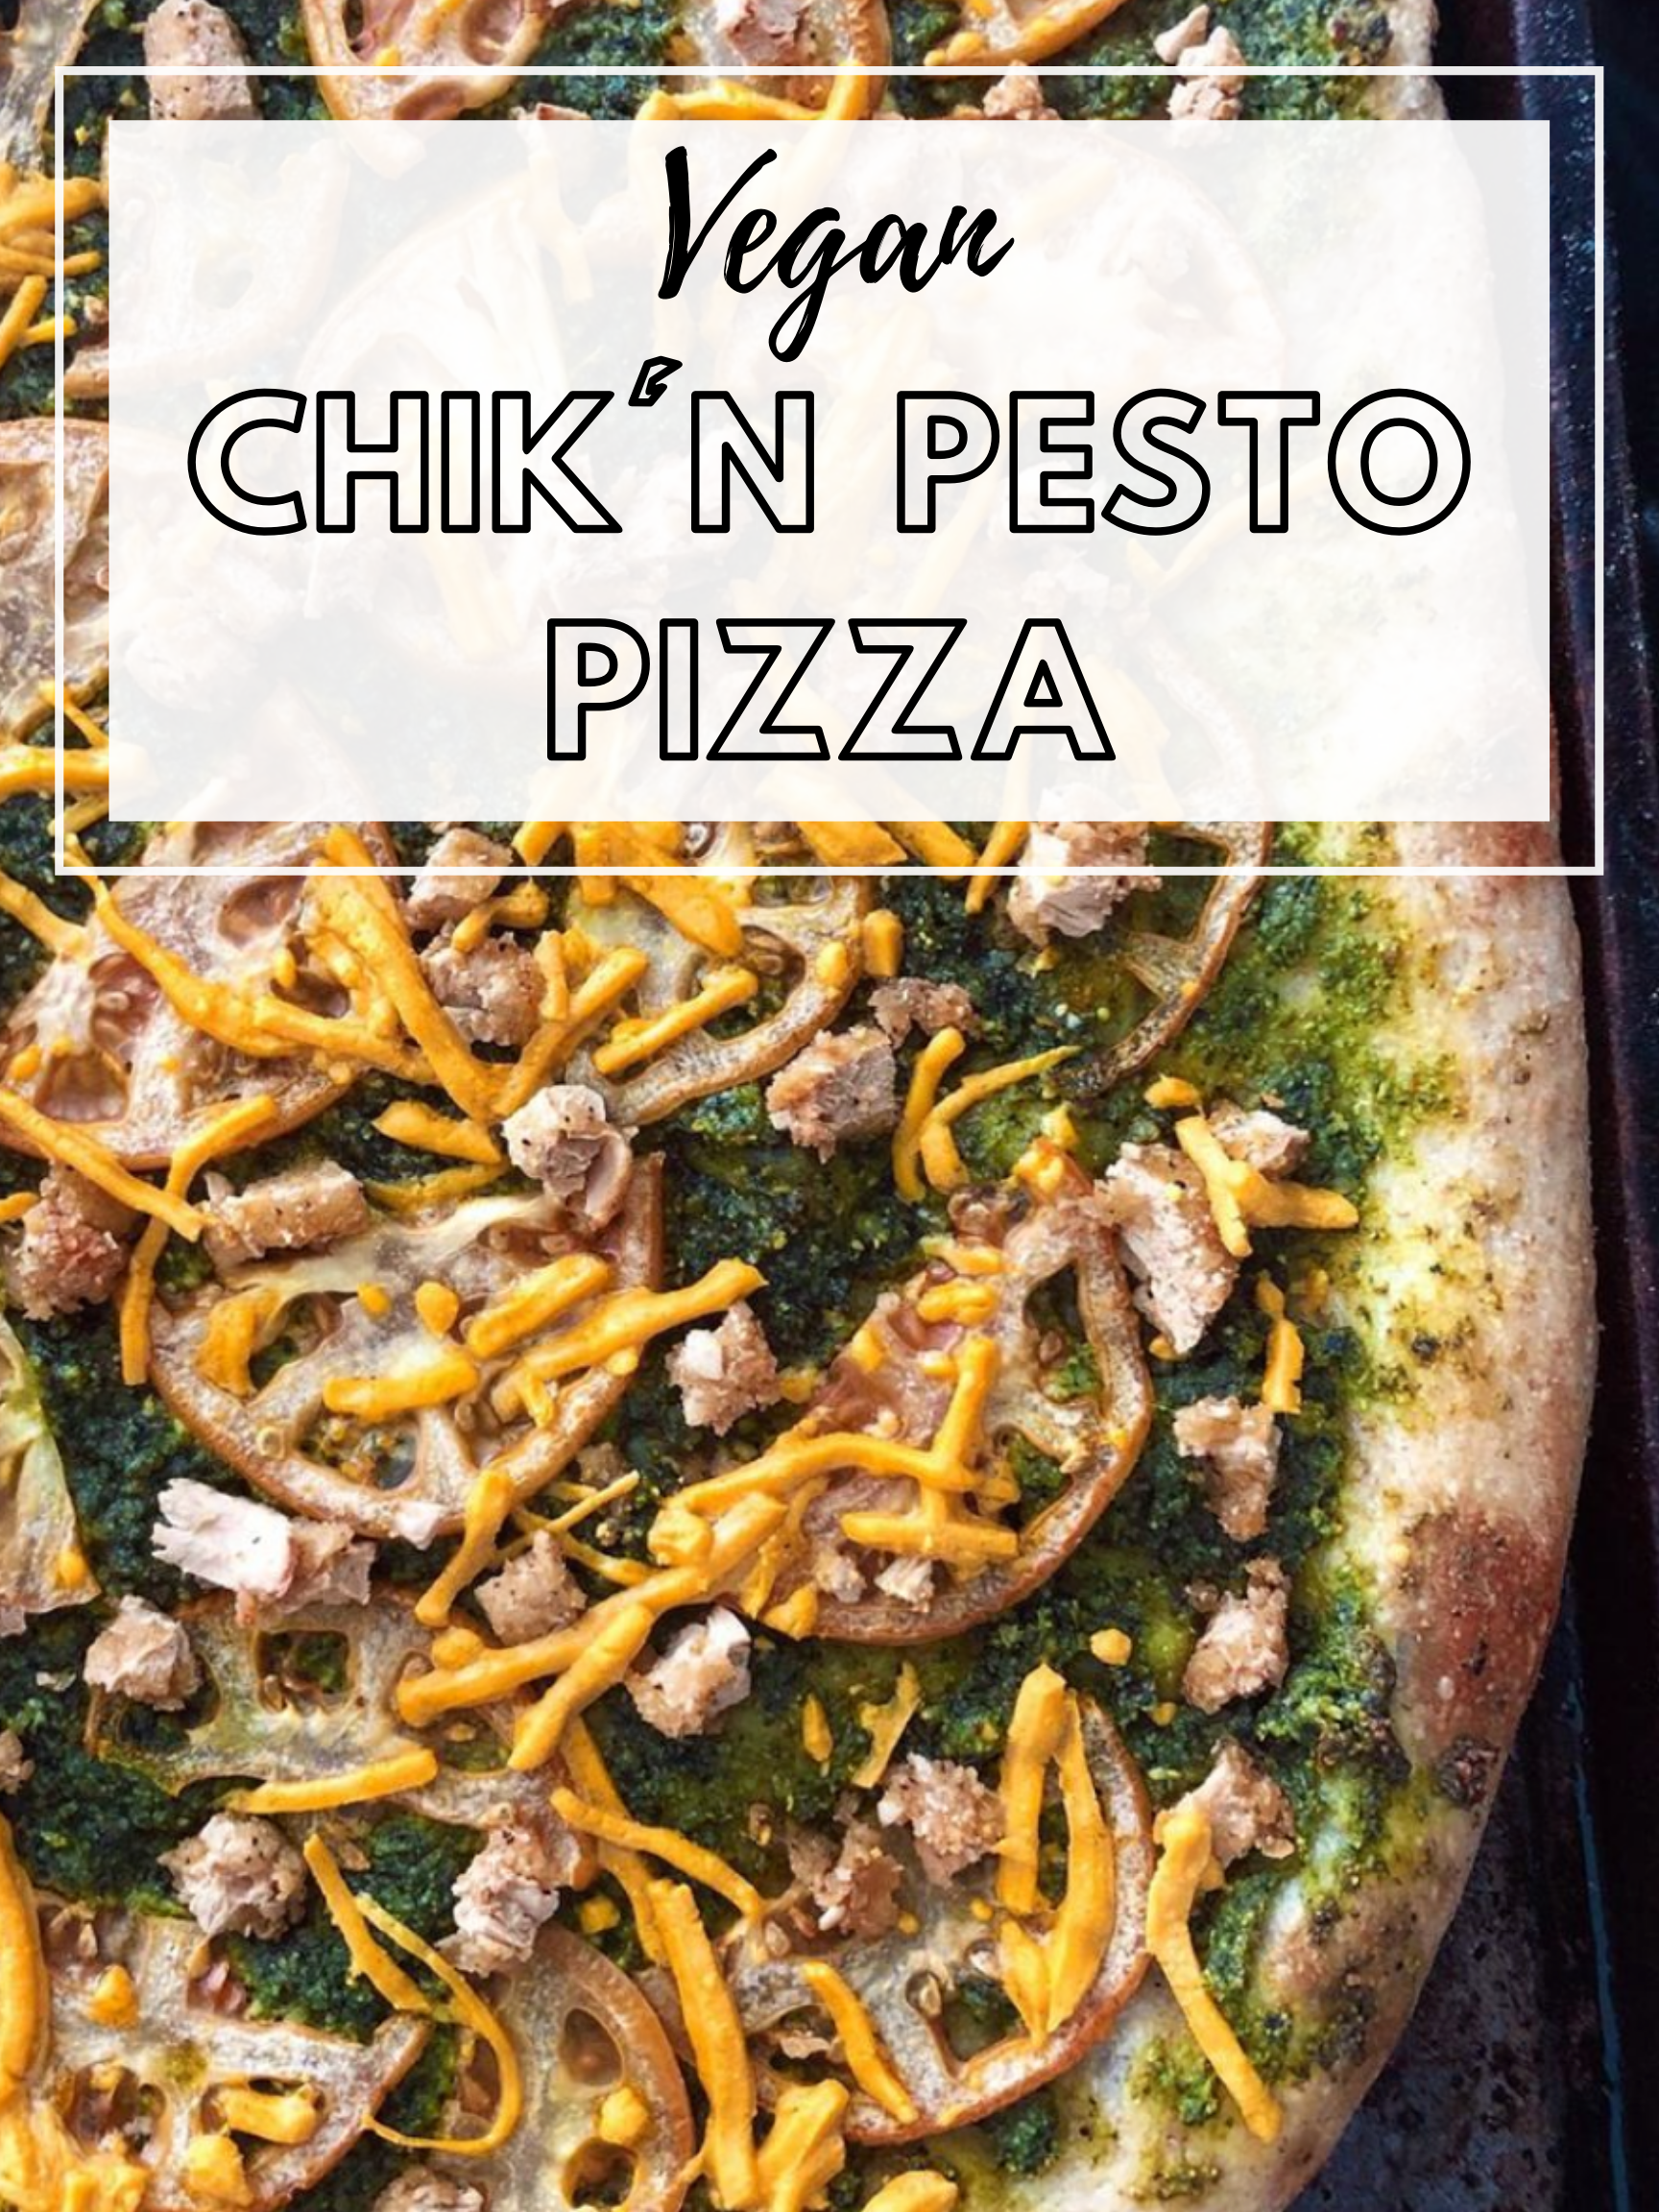 Chik'n Pesto Pizza (Vegan)